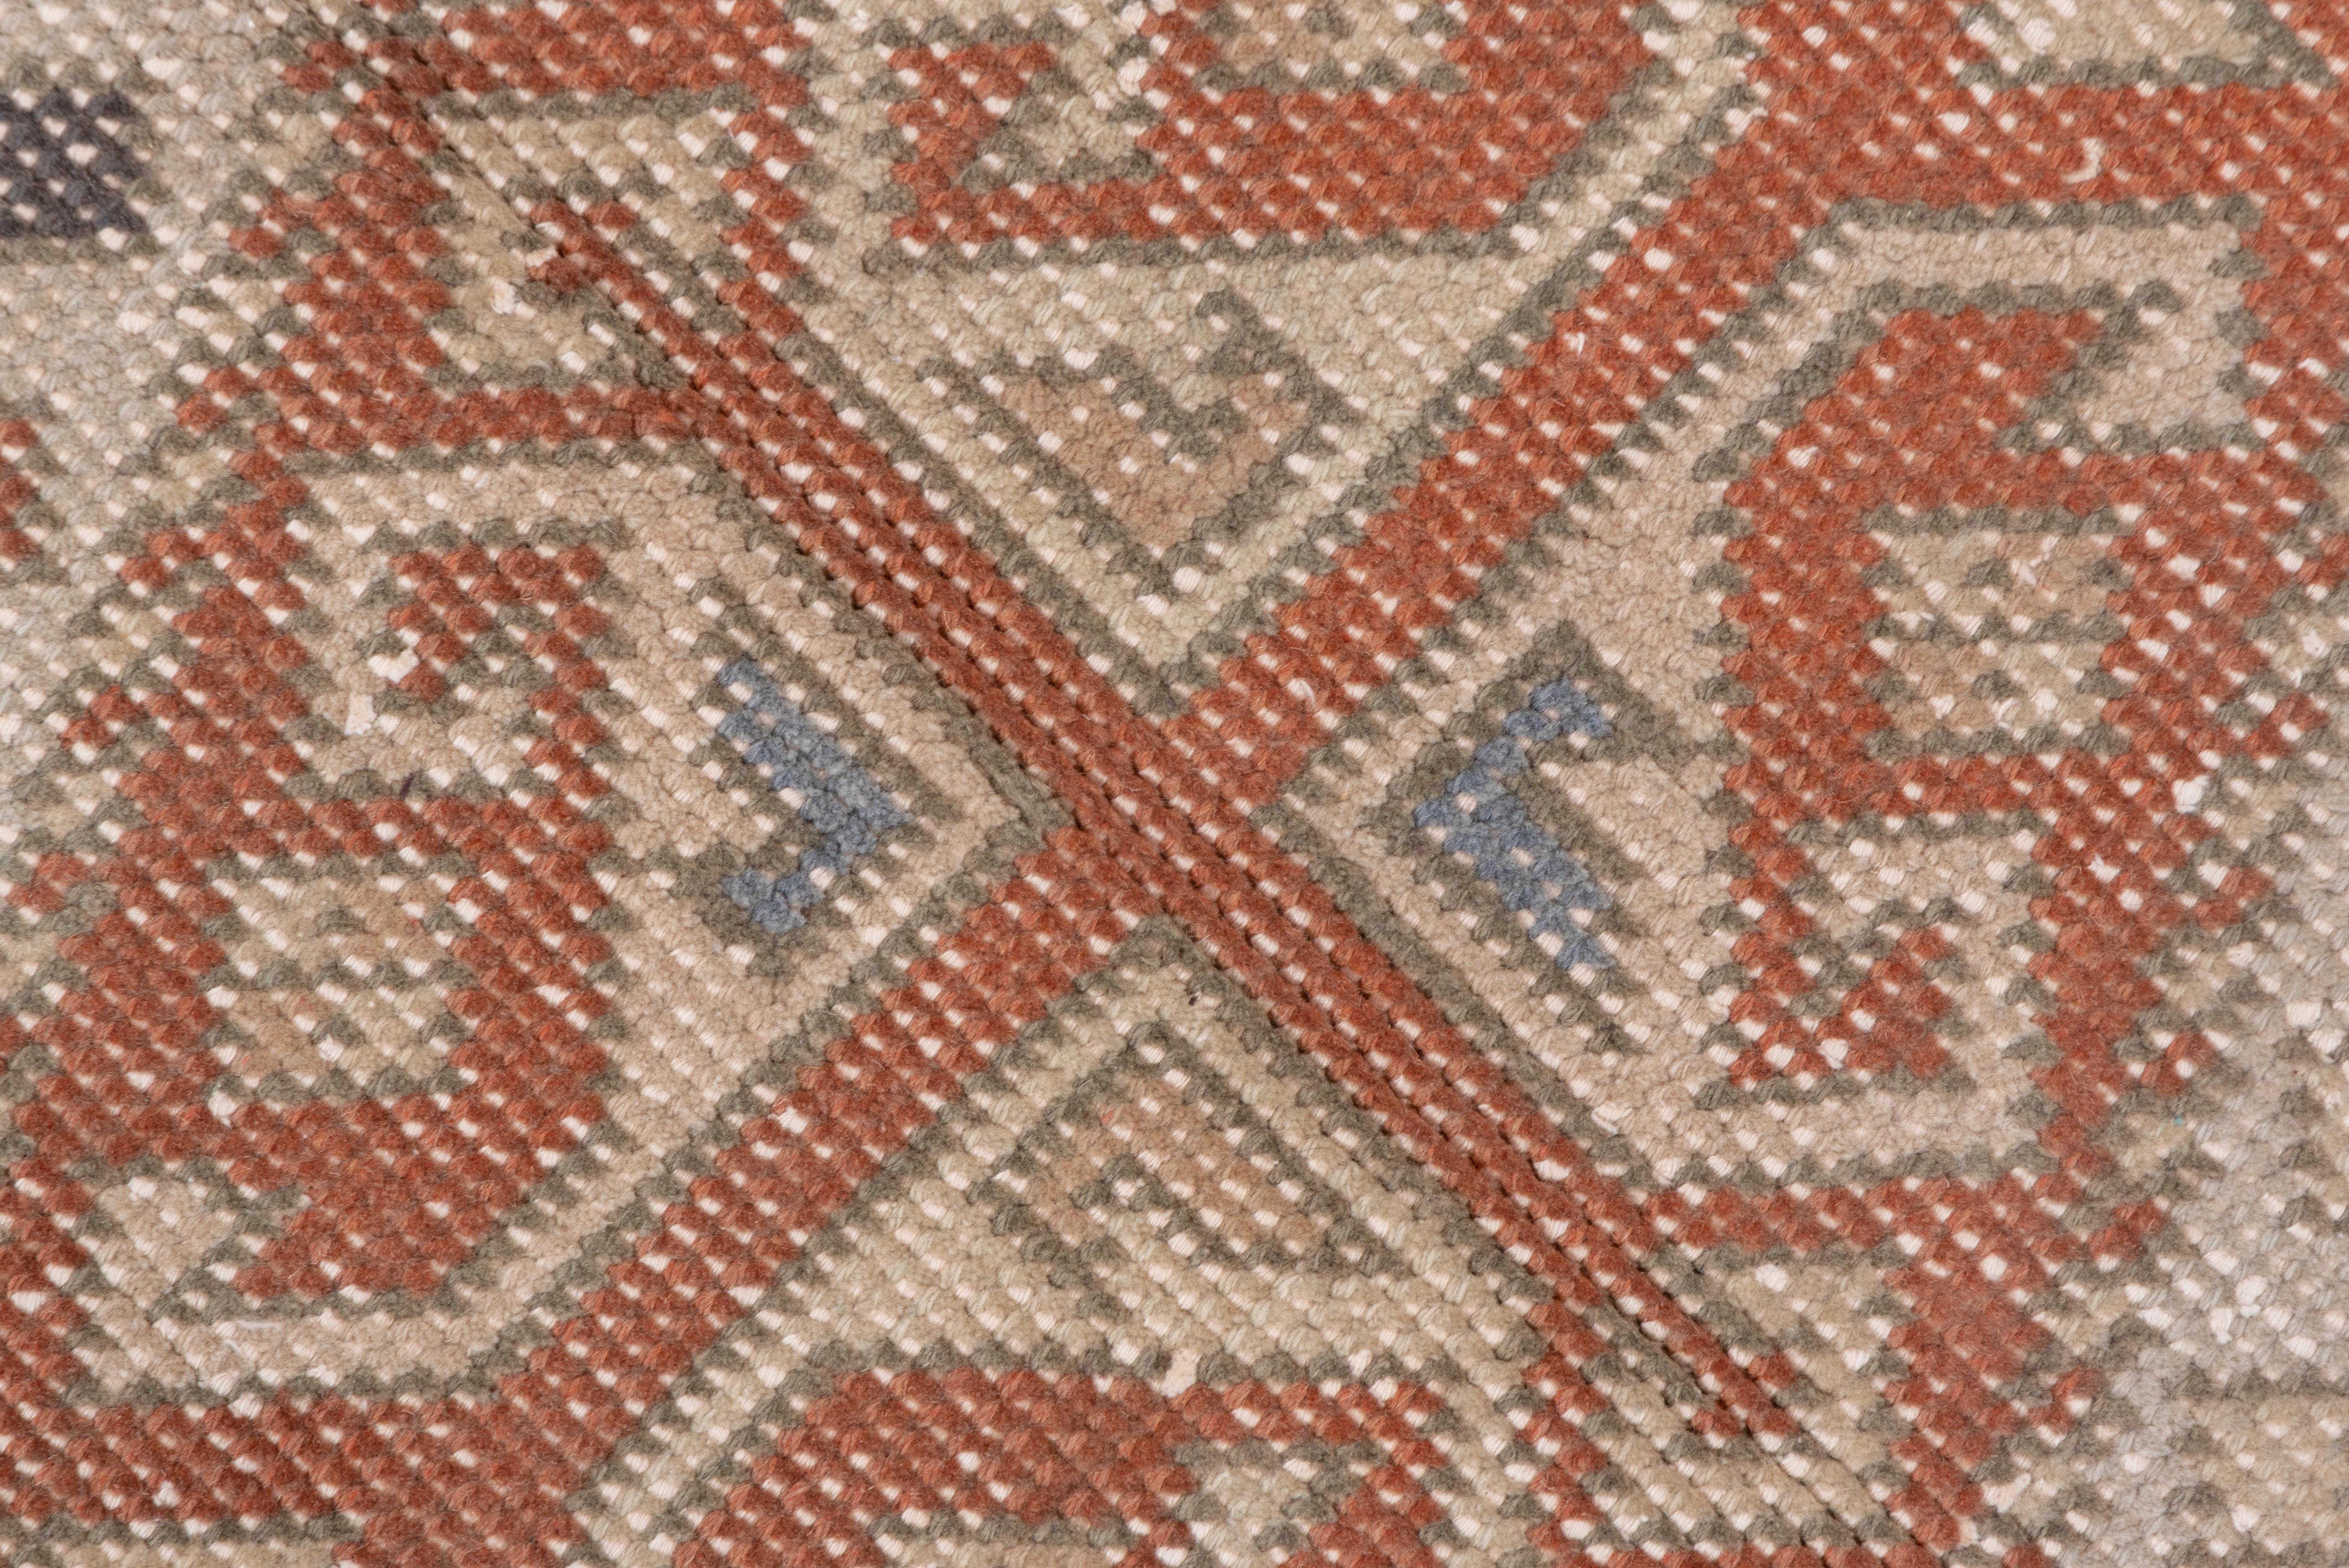 Mid-20th Century Vintage Tribal Turkish Sparta Carpet Geometric Design, Brown, Ivory & Blue Tones For Sale